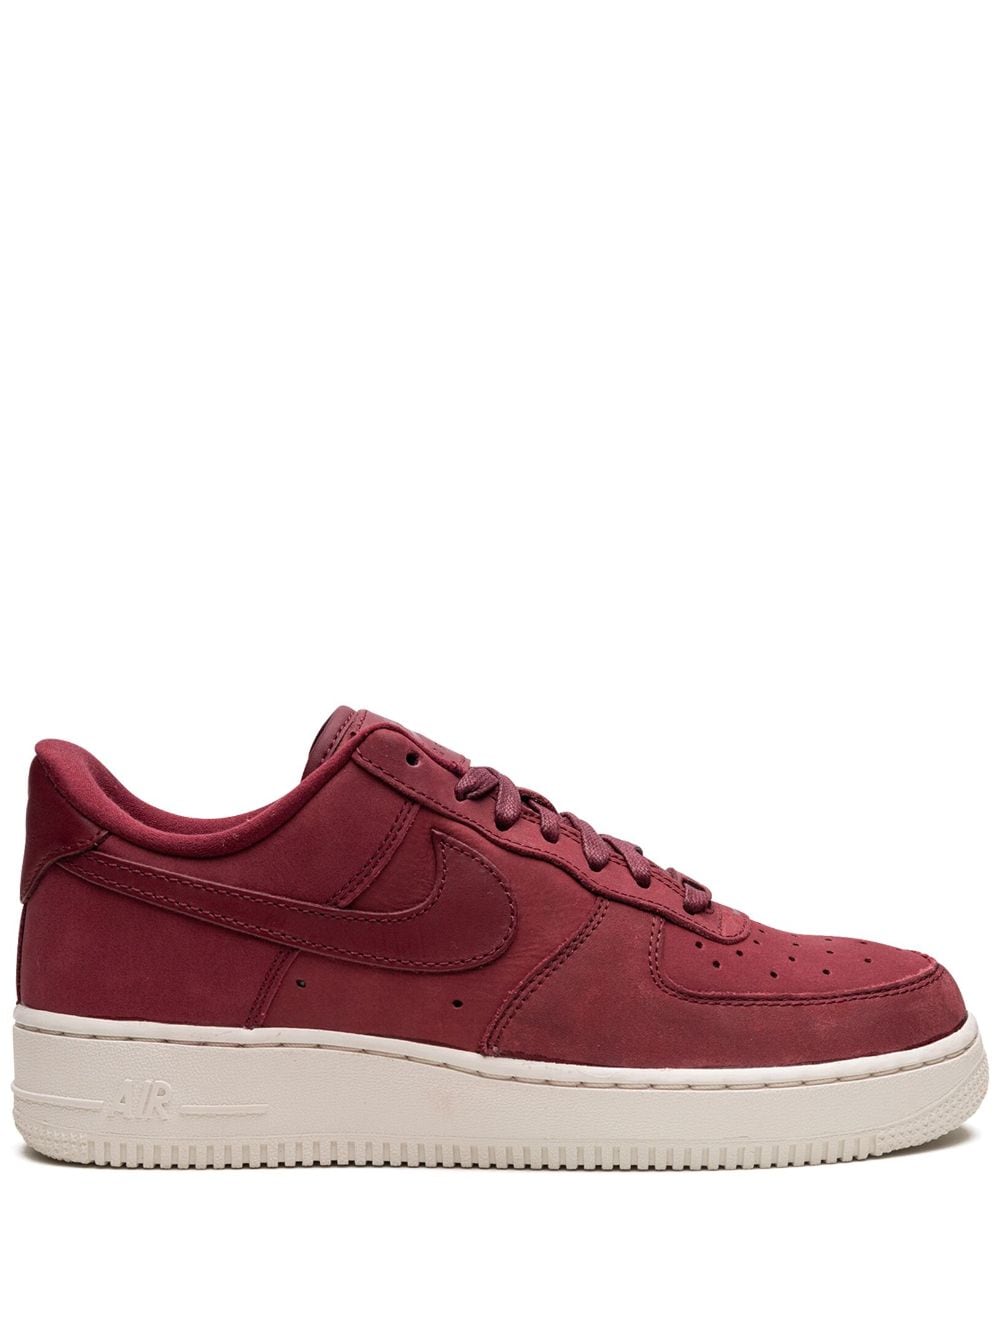 Nike Air Force 1 Premium Sneakers In Red